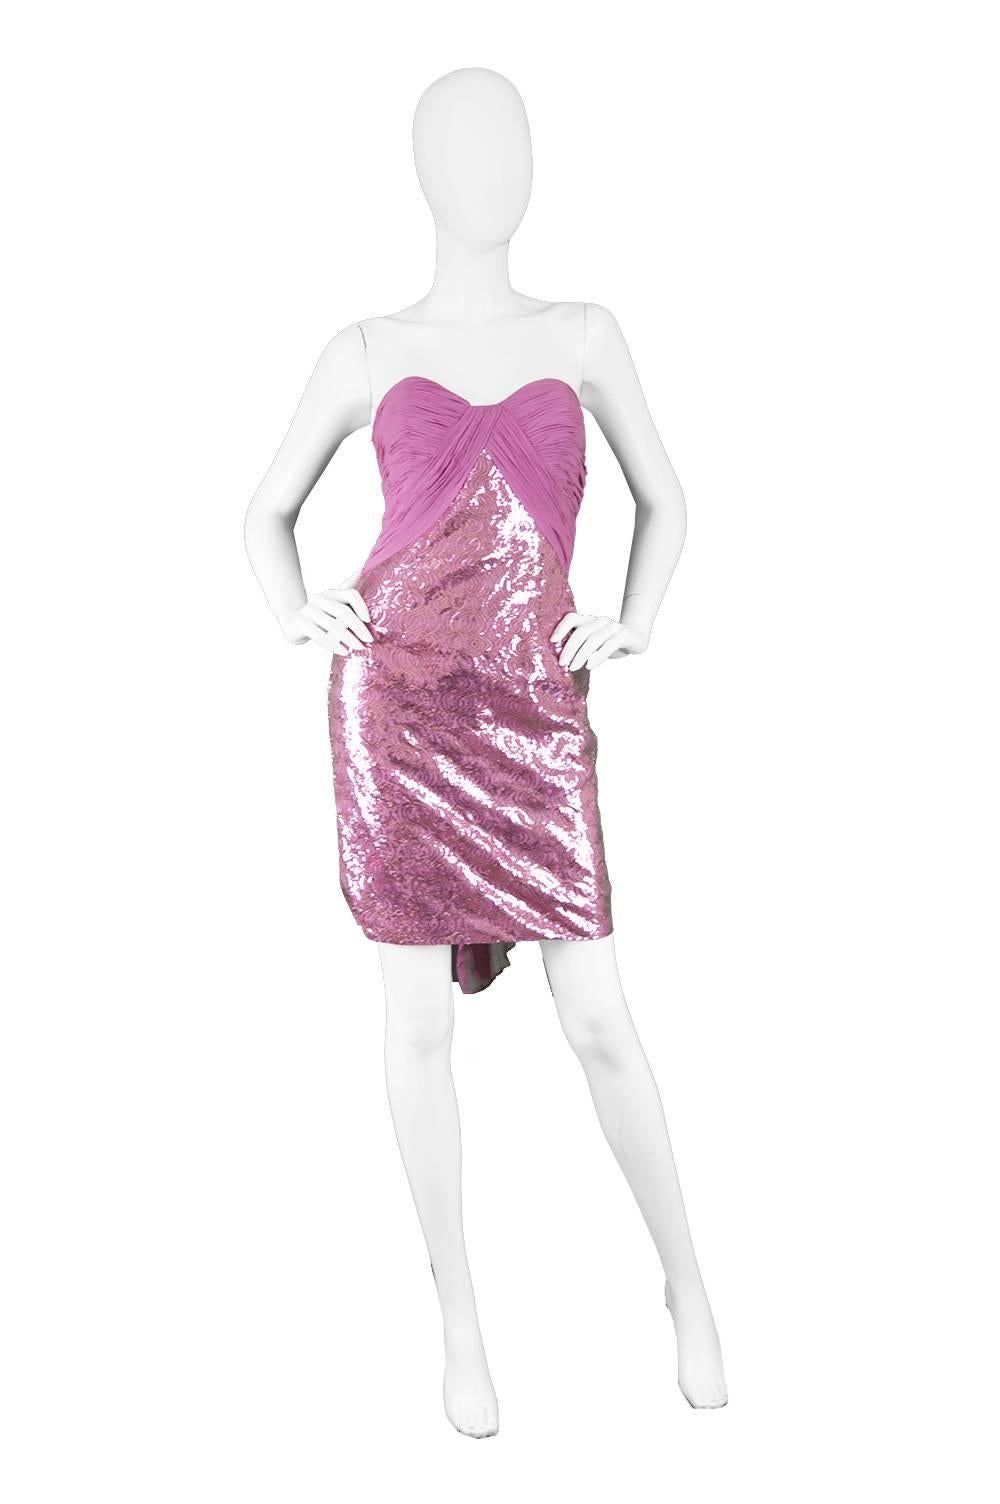 Vicky Tiel Pink Sequin & Ruched Silk Chiffon Evening Mini Party Dress

Estimated Size: UK 4-6/ US 0-2/ EU 32-34. Please check measurements.
Bust - 30” / 76cm
Waist - 24” / 61cm
Hips - 34” / 86cm
Length (Bust to Hem) - 28” / 71cm

Condition: